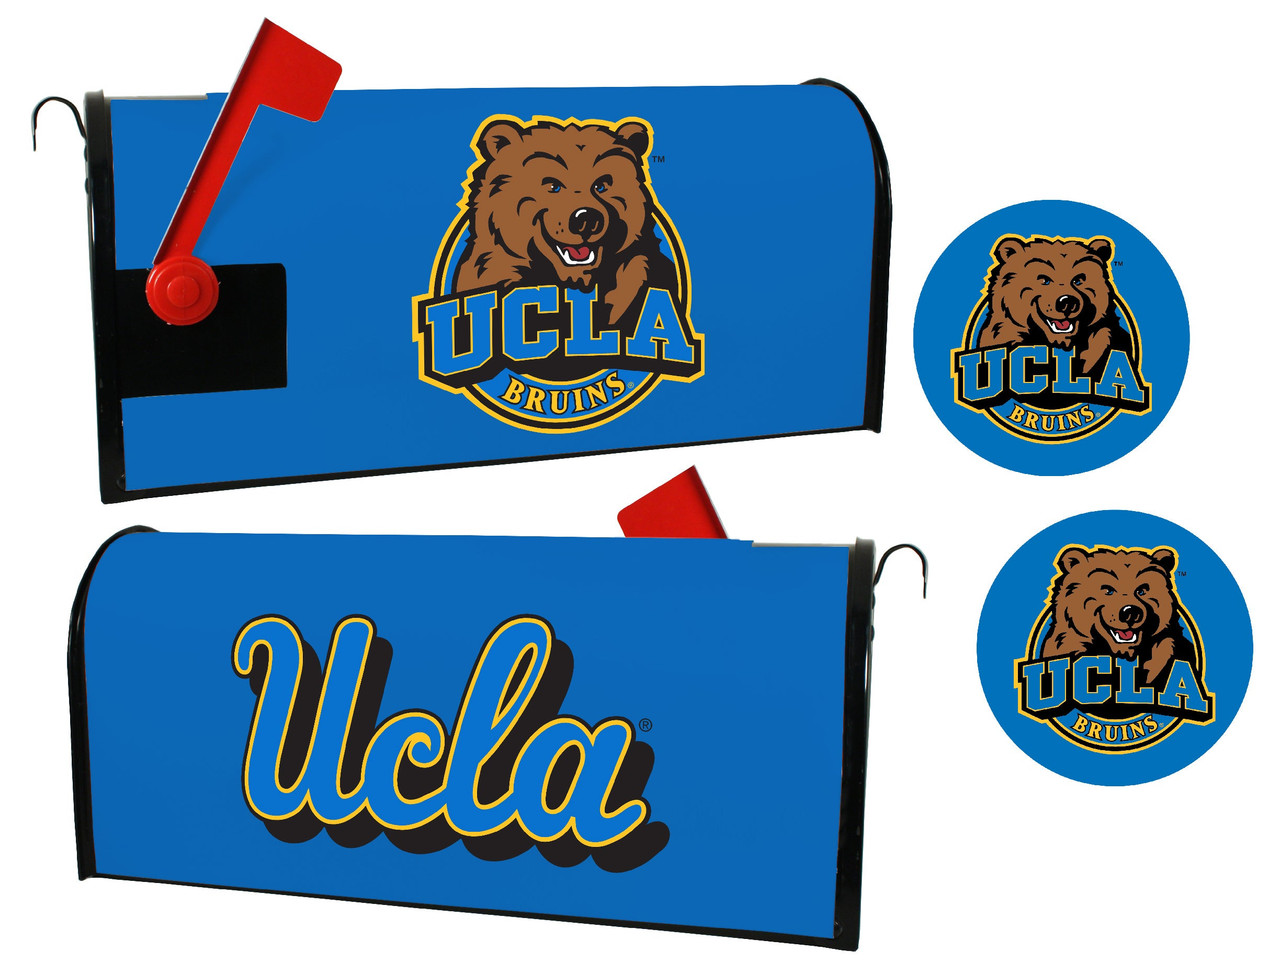 UCLA Bruins Magnetic Mailbox Cover & Sticker Set